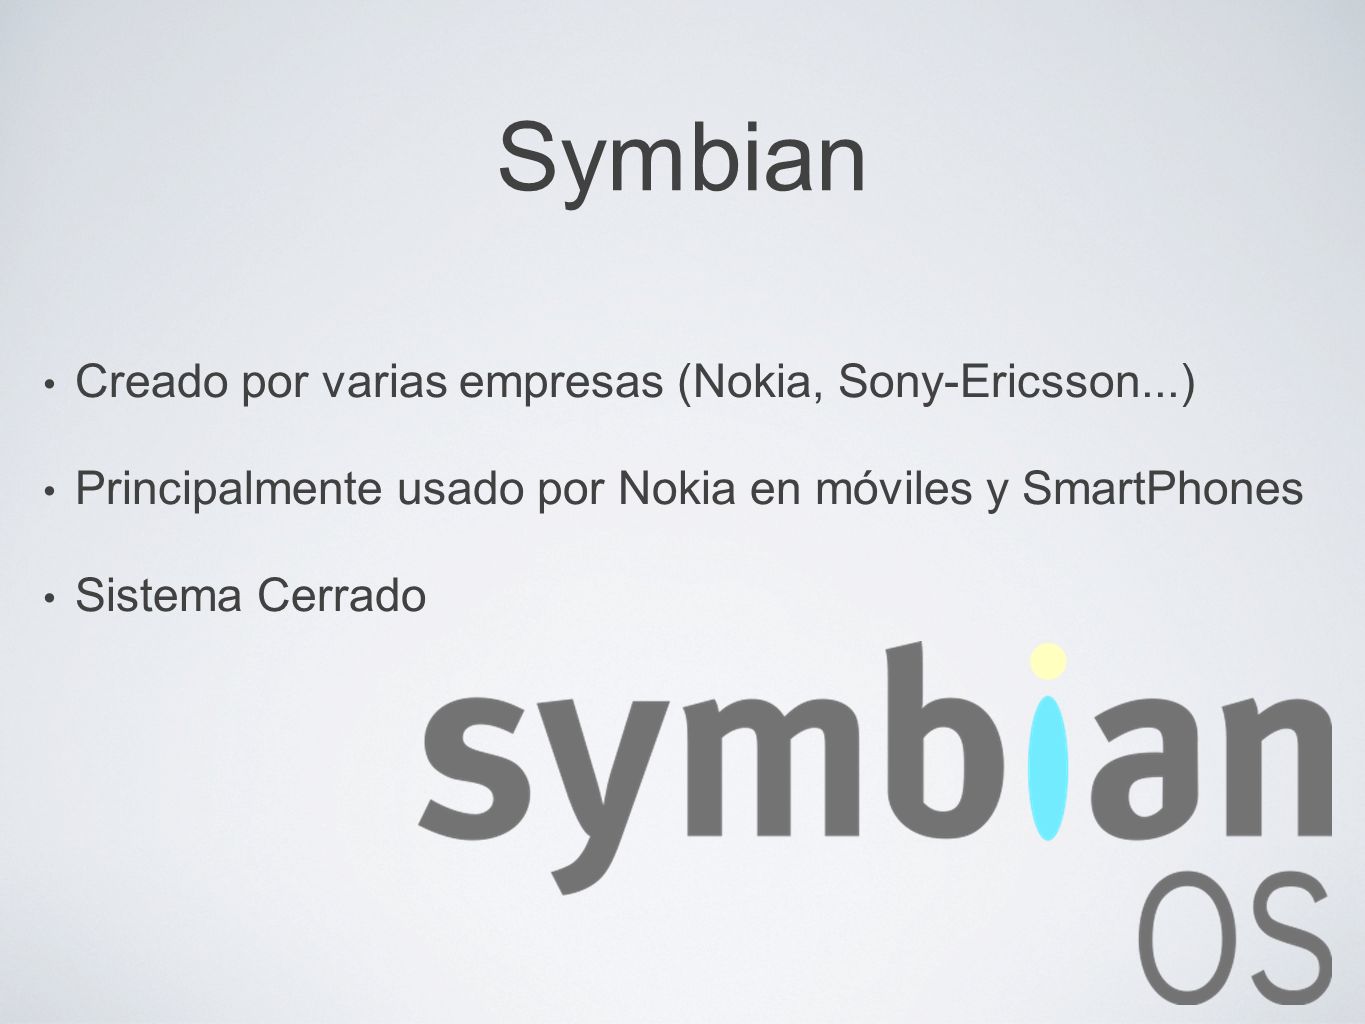 Symbian Creado por varias empresas (Nokia, Sony-Ericsson...)